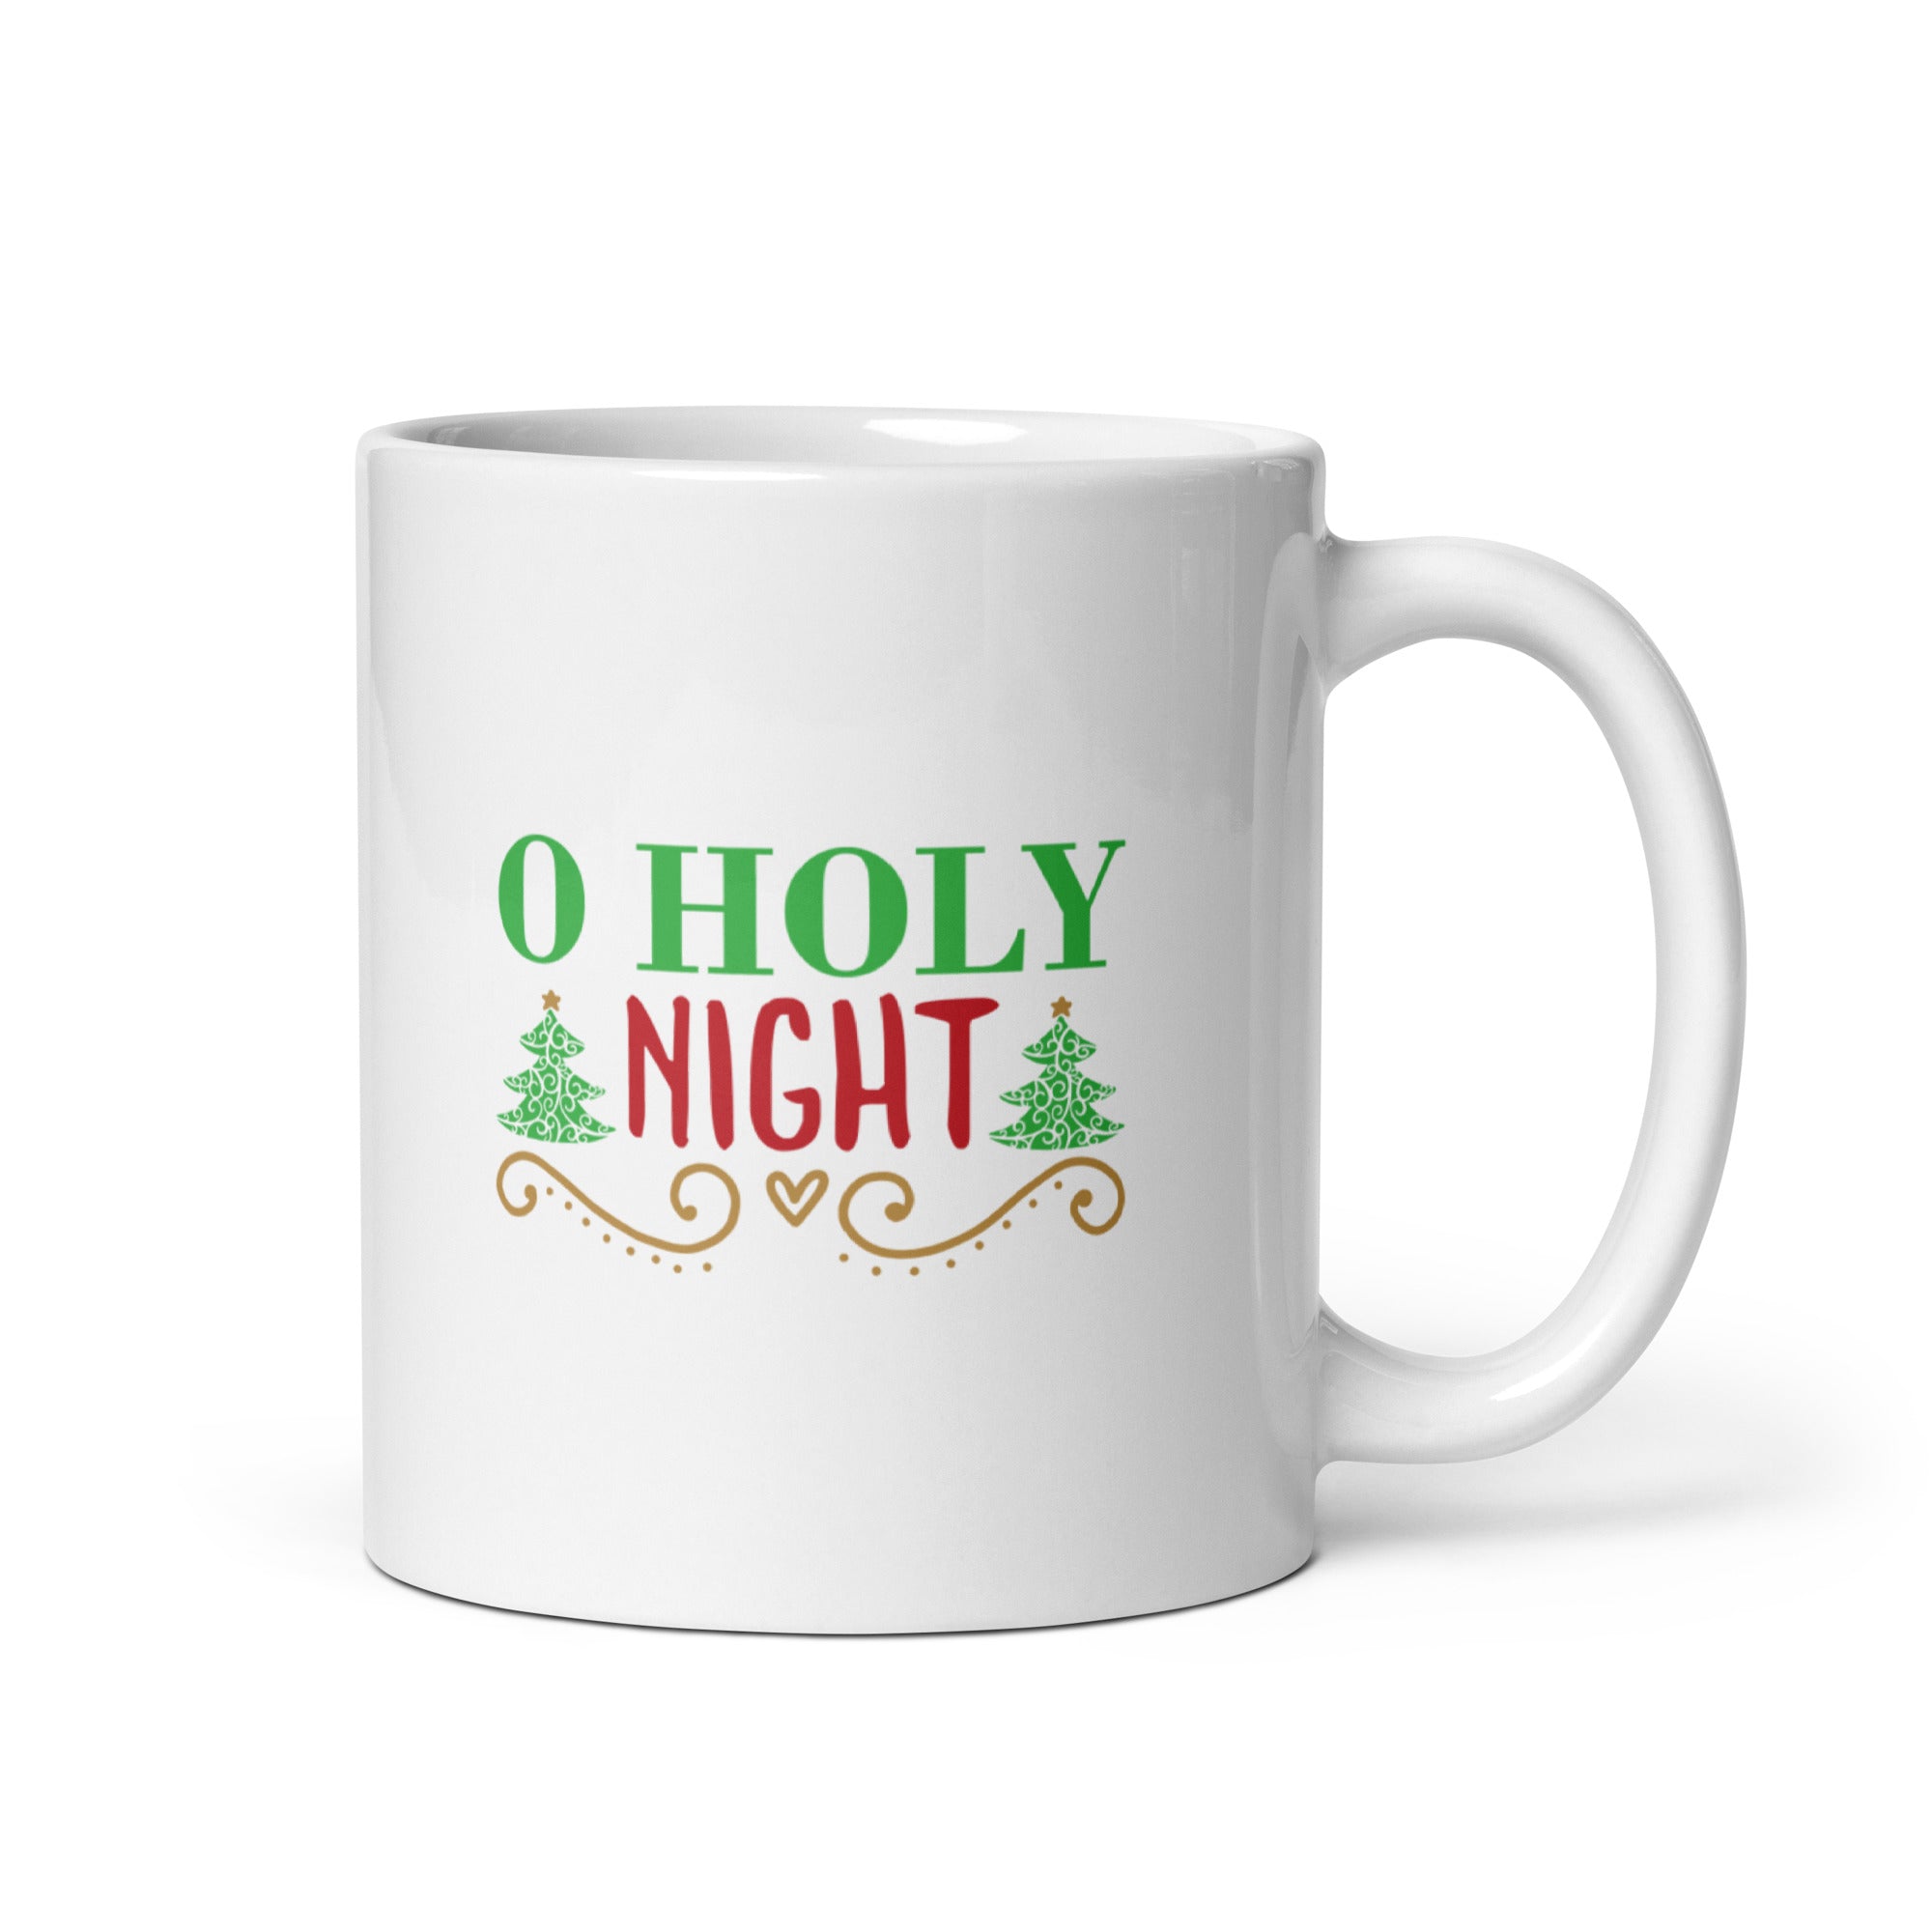 Oh Holy Night - White glossy mug